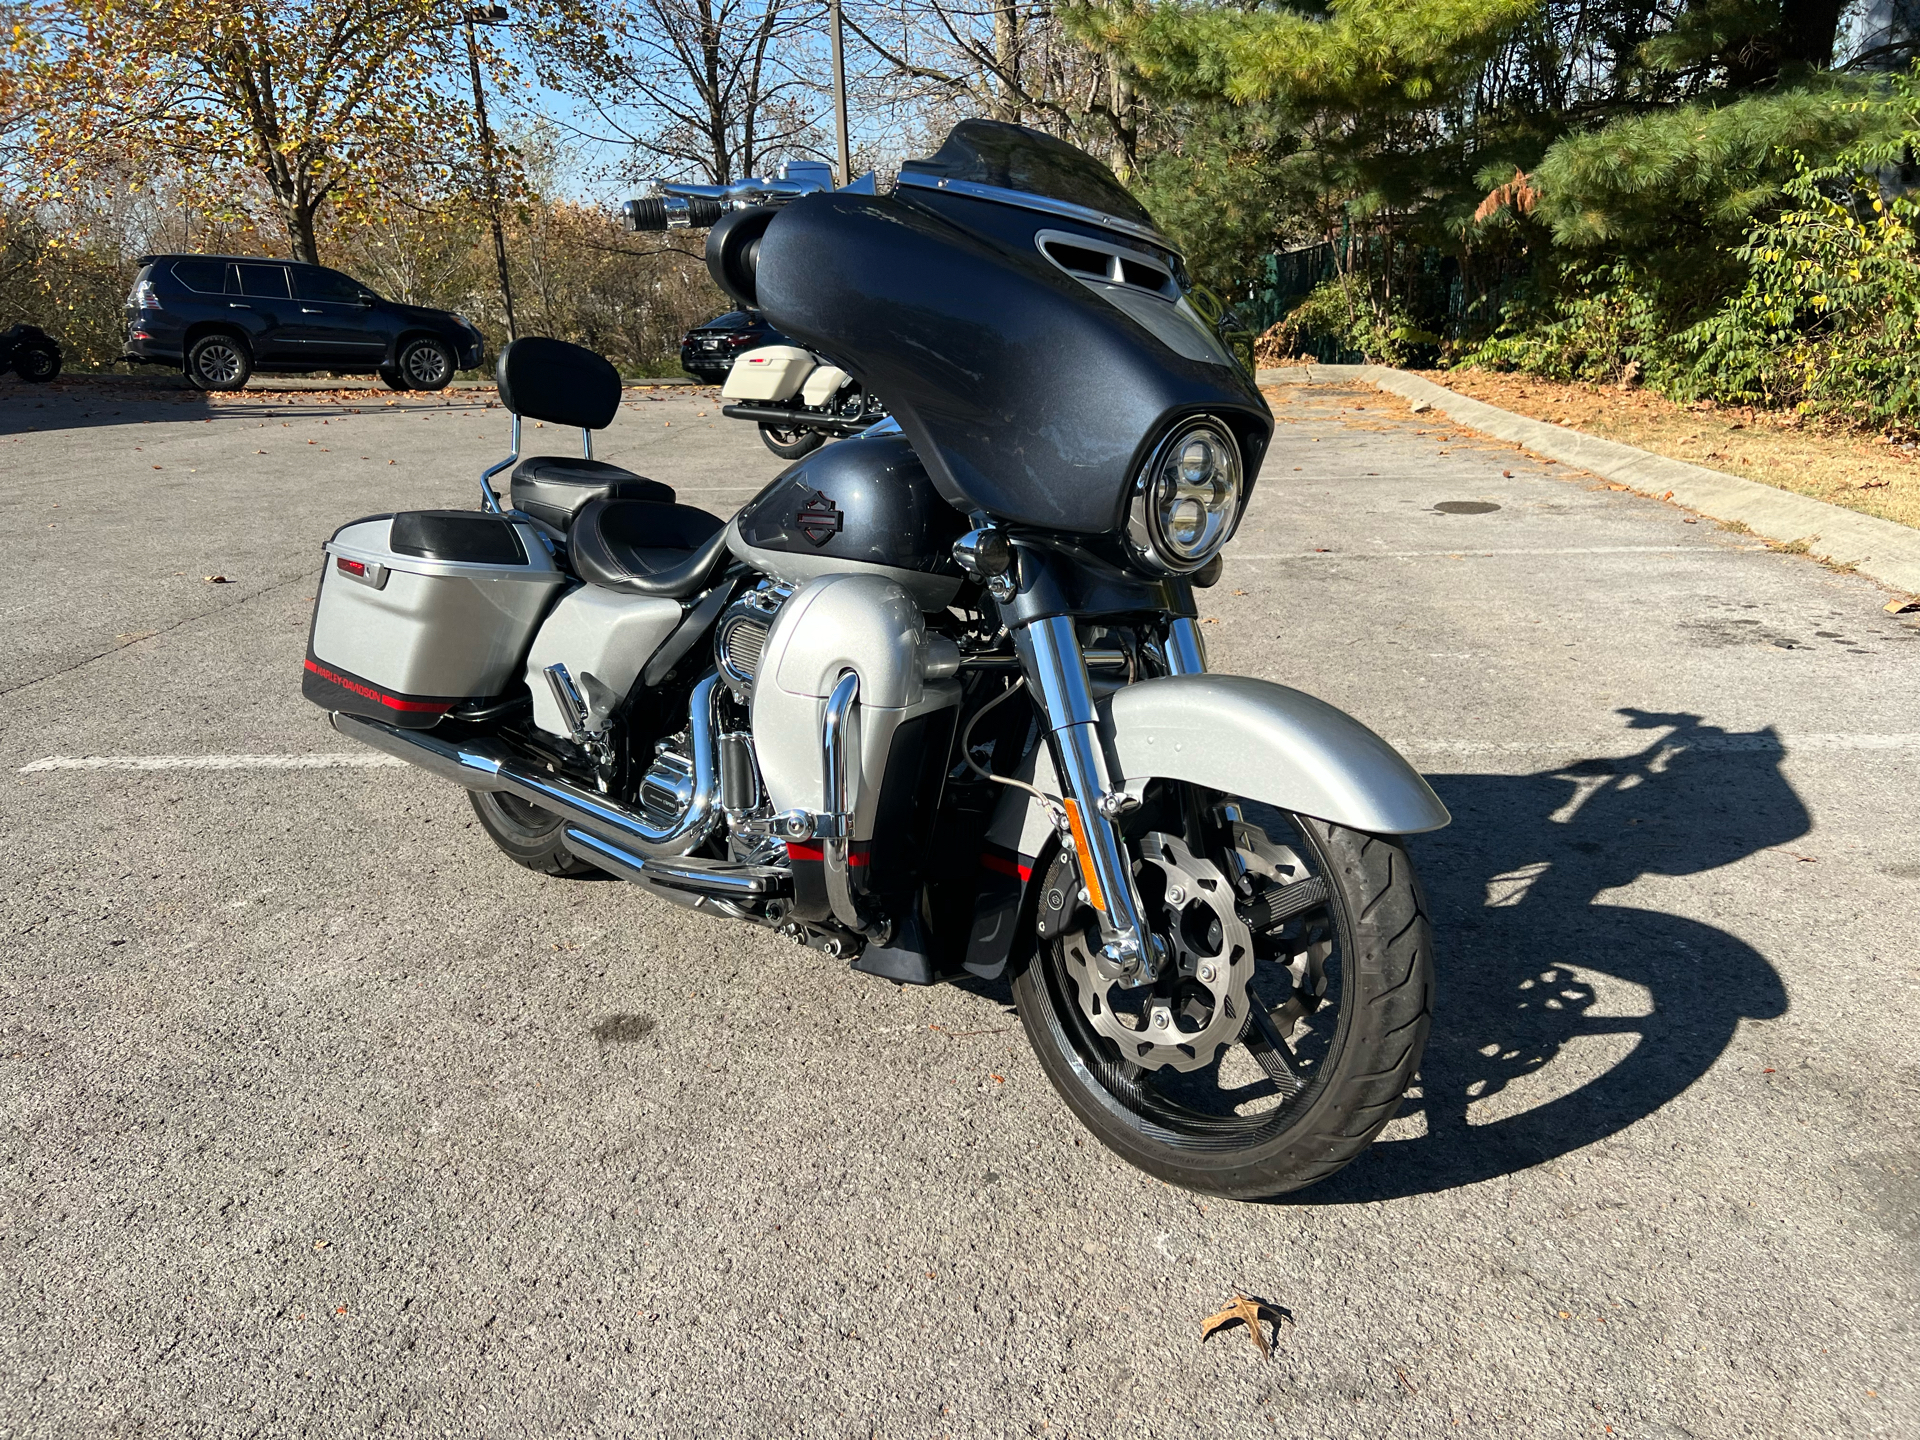 2019 Harley-Davidson CVO™ Street Glide® in Franklin, Tennessee - Photo 7